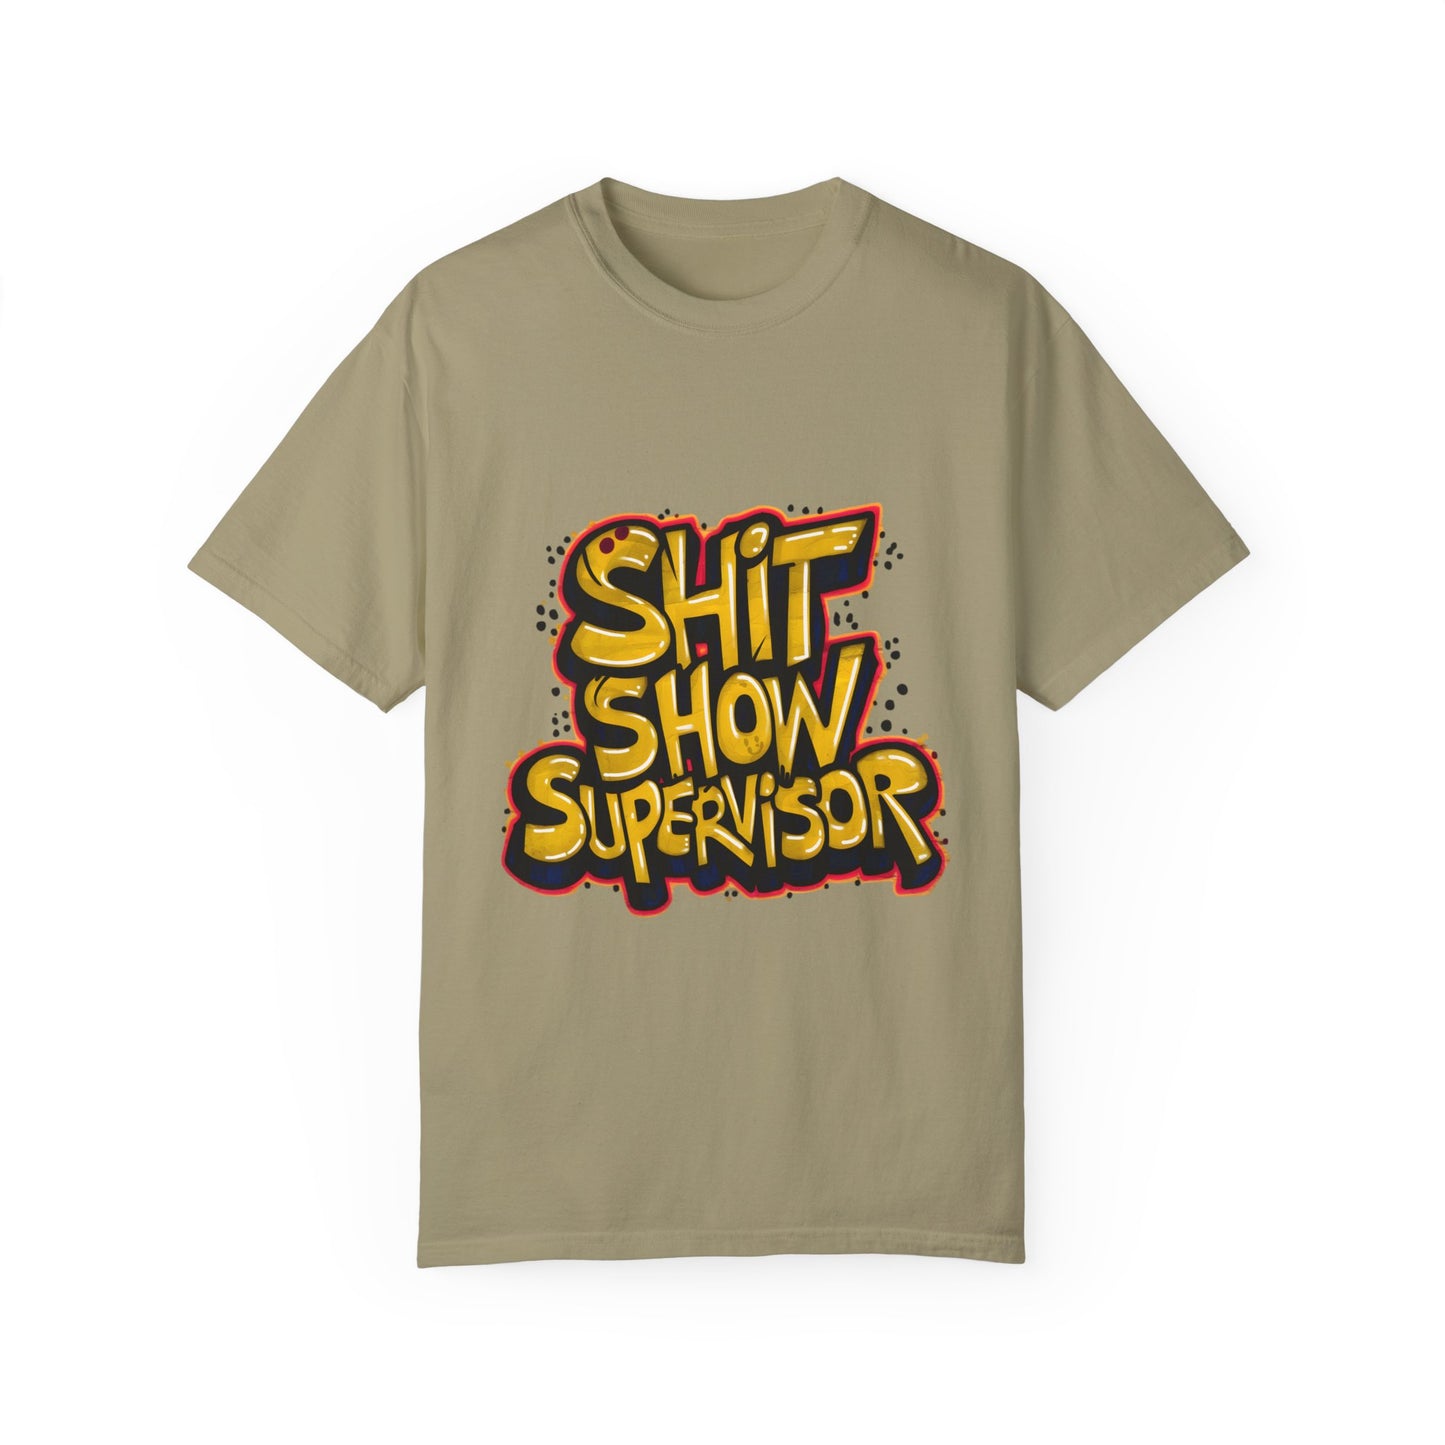 Shit Show Supervisor Urban Sarcastic Graphic Unisex Garment Dyed T-shirt Cotton Funny Humorous Graphic Soft Premium Unisex Men Women Khaki T-shirt Birthday Gift-11